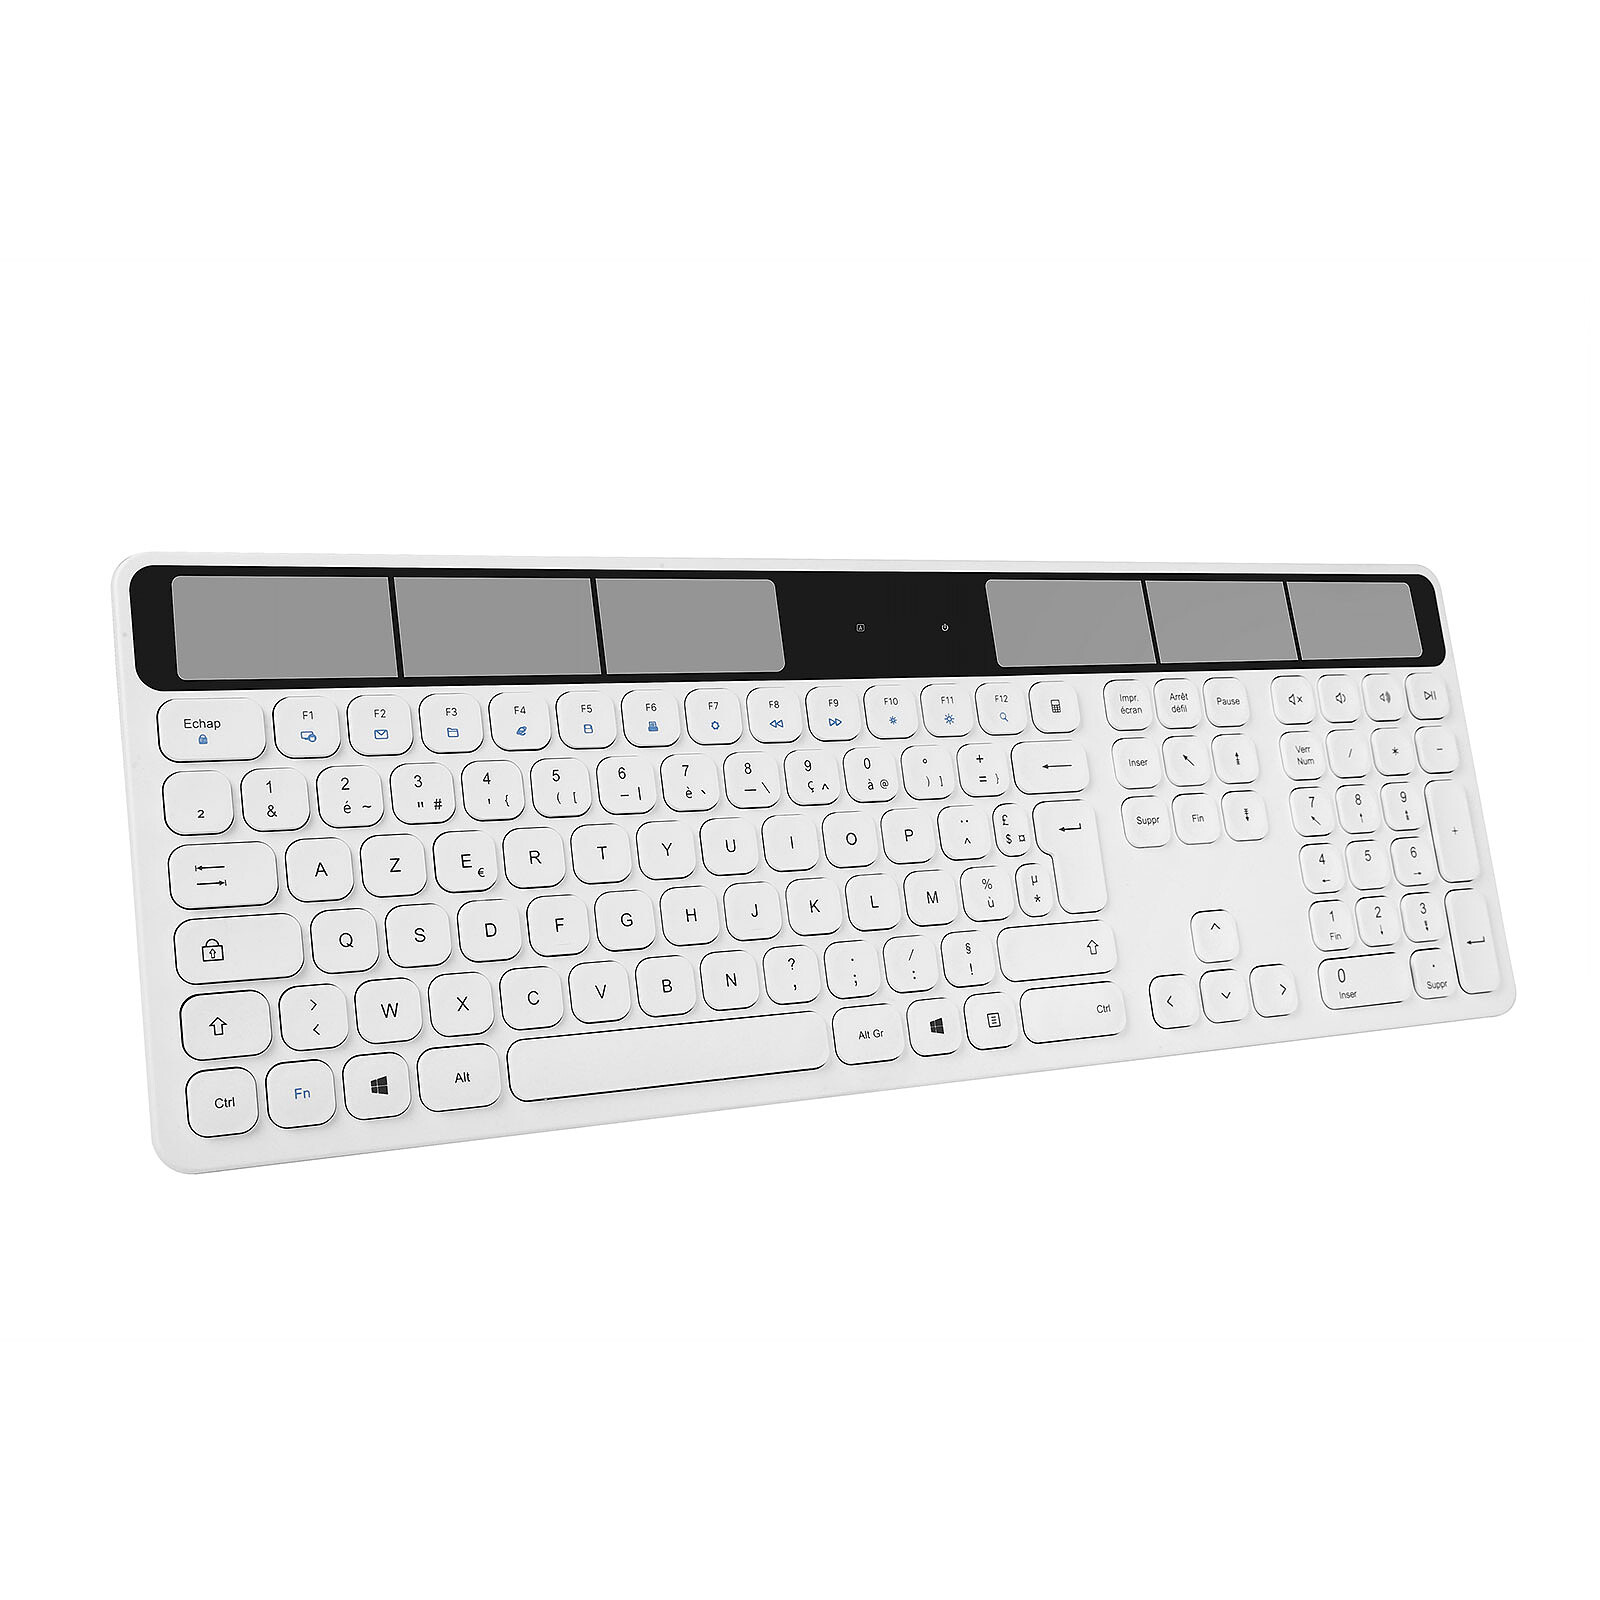 TX KB5 - clavier - français (AZERTY) - blanc